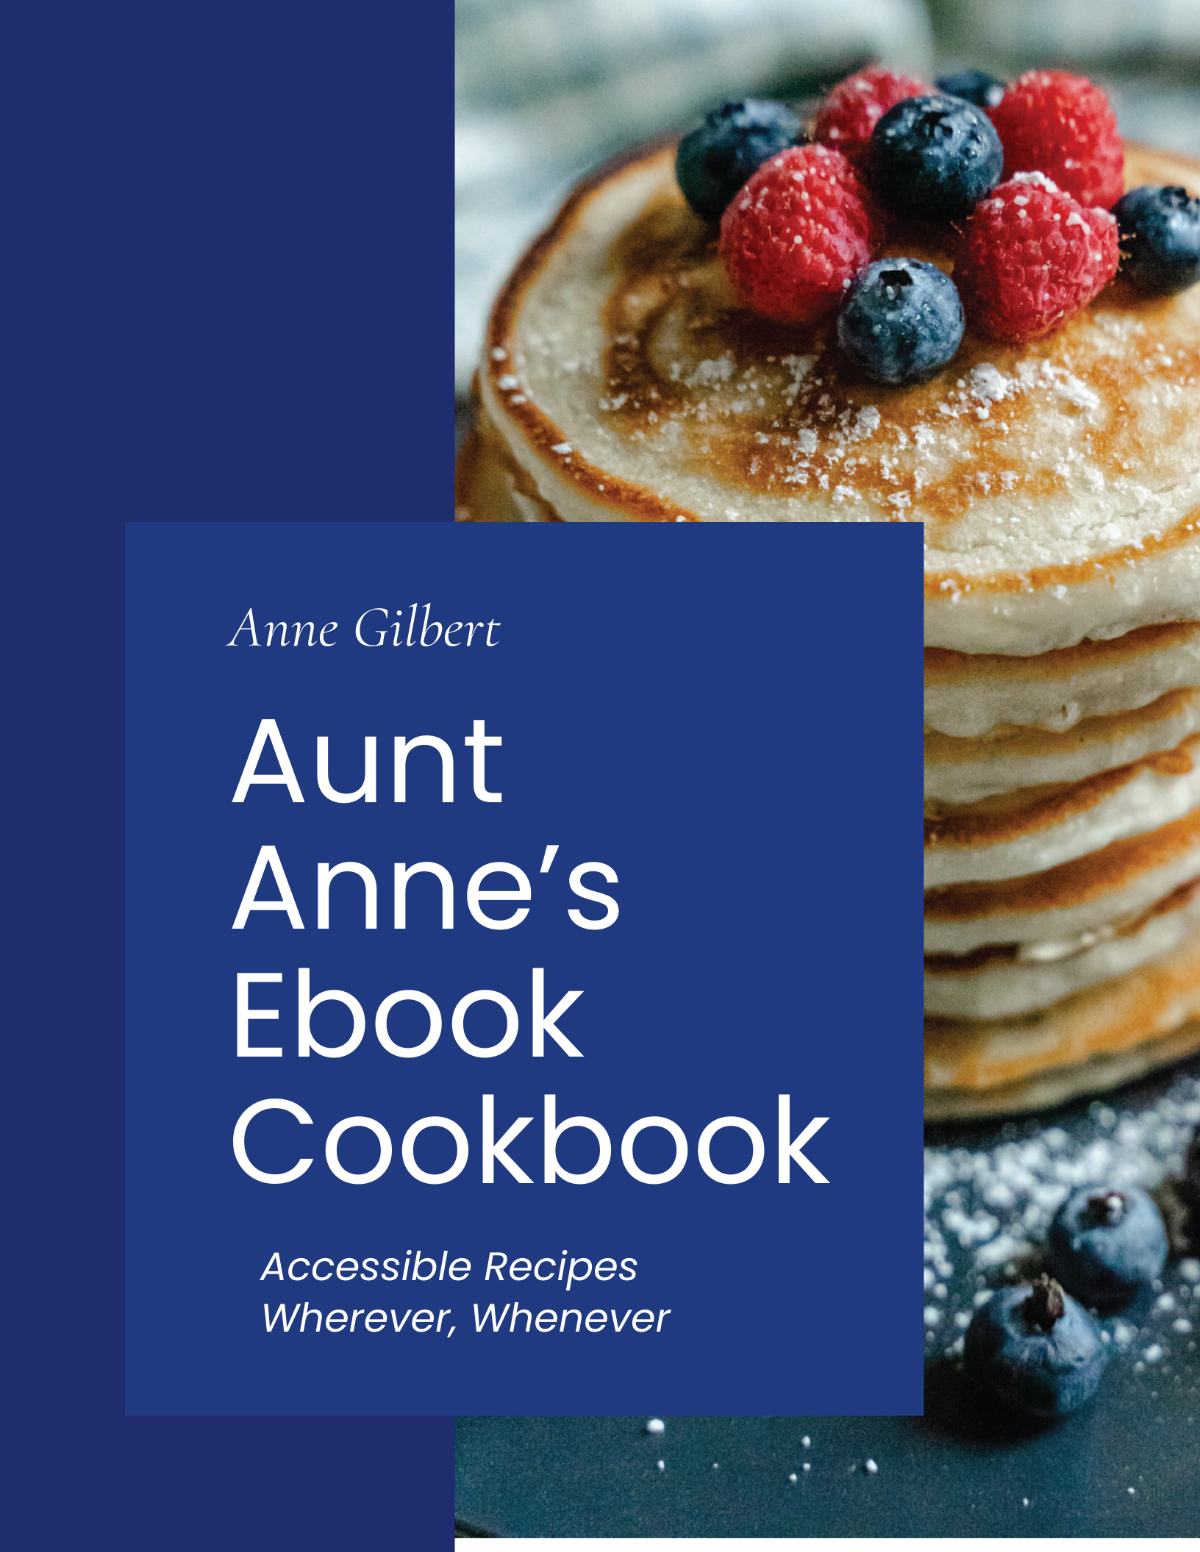 Free Creative Ebook Cookbook Template